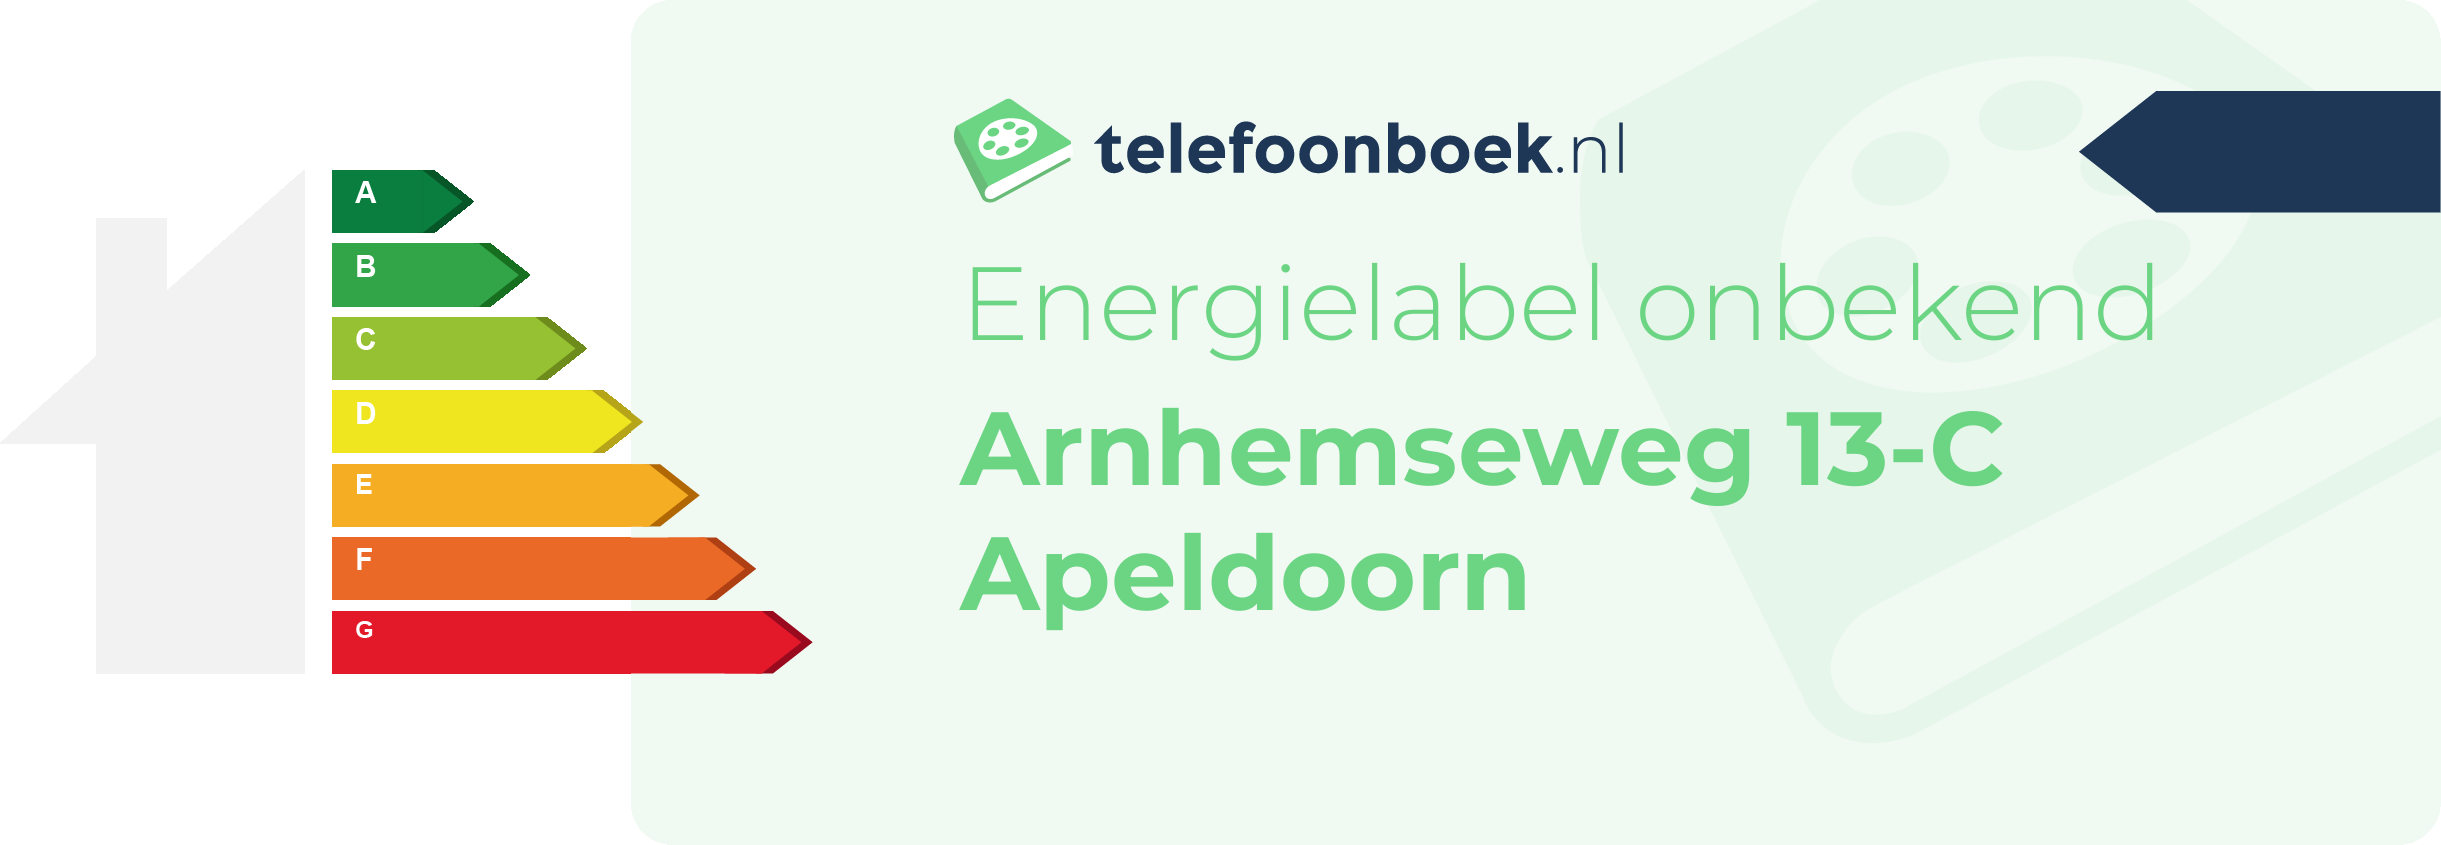 Energielabel Arnhemseweg 13-C Apeldoorn